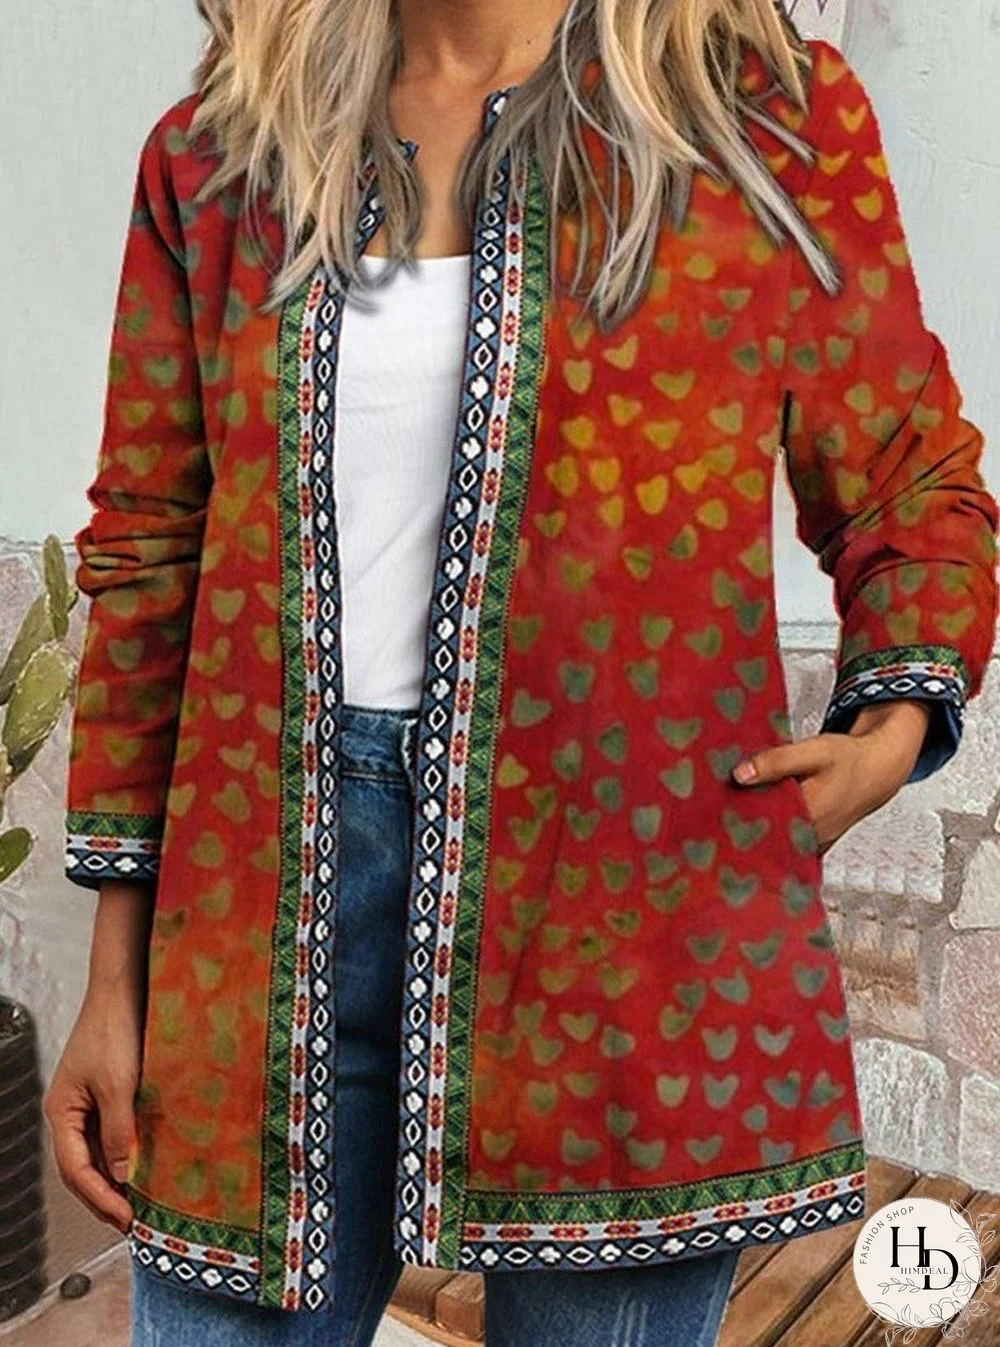 Casual Retro Ethnic Print Long-Sleeved Jacket